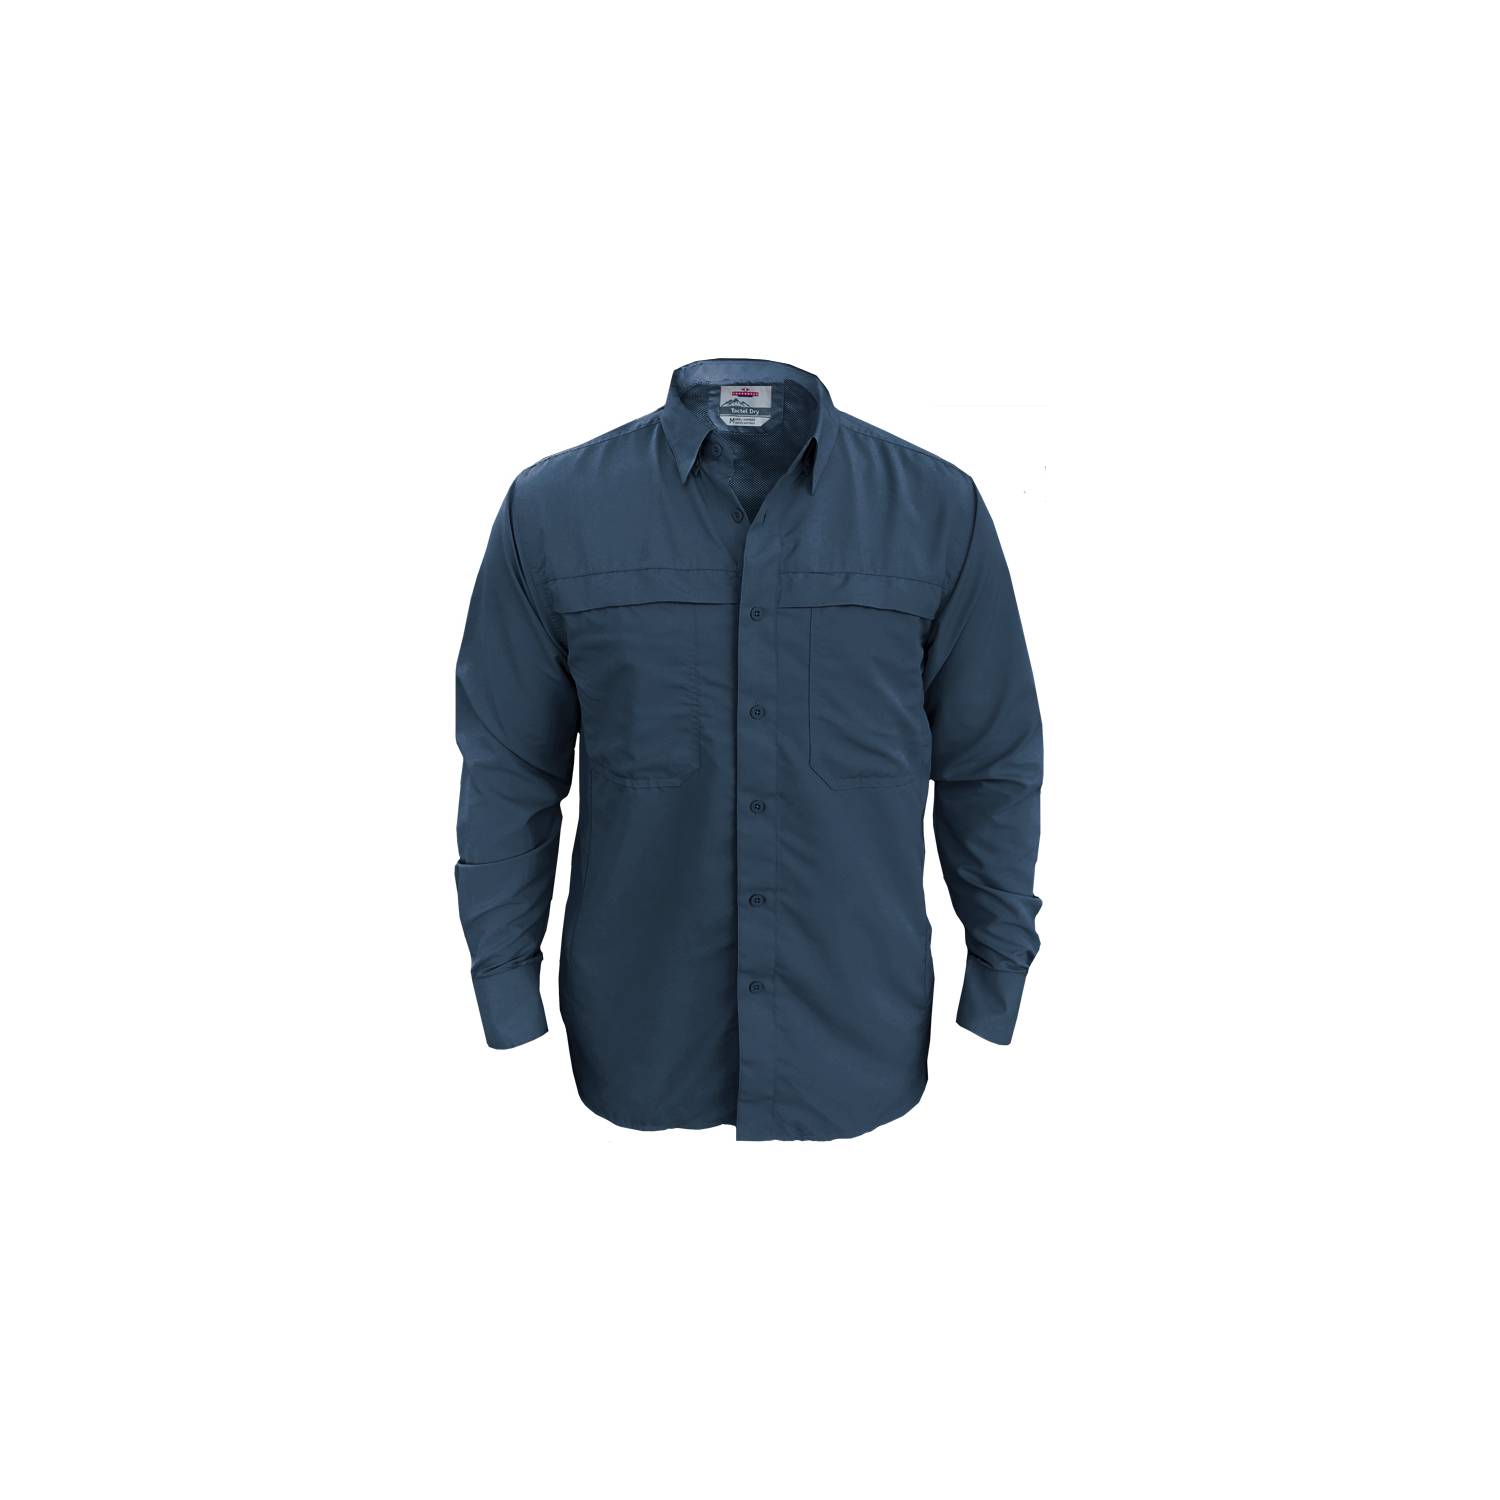 INDUSBORD Camisa Outdoor Tactel Dry Ripstop Uv50 certificada | falabella.com